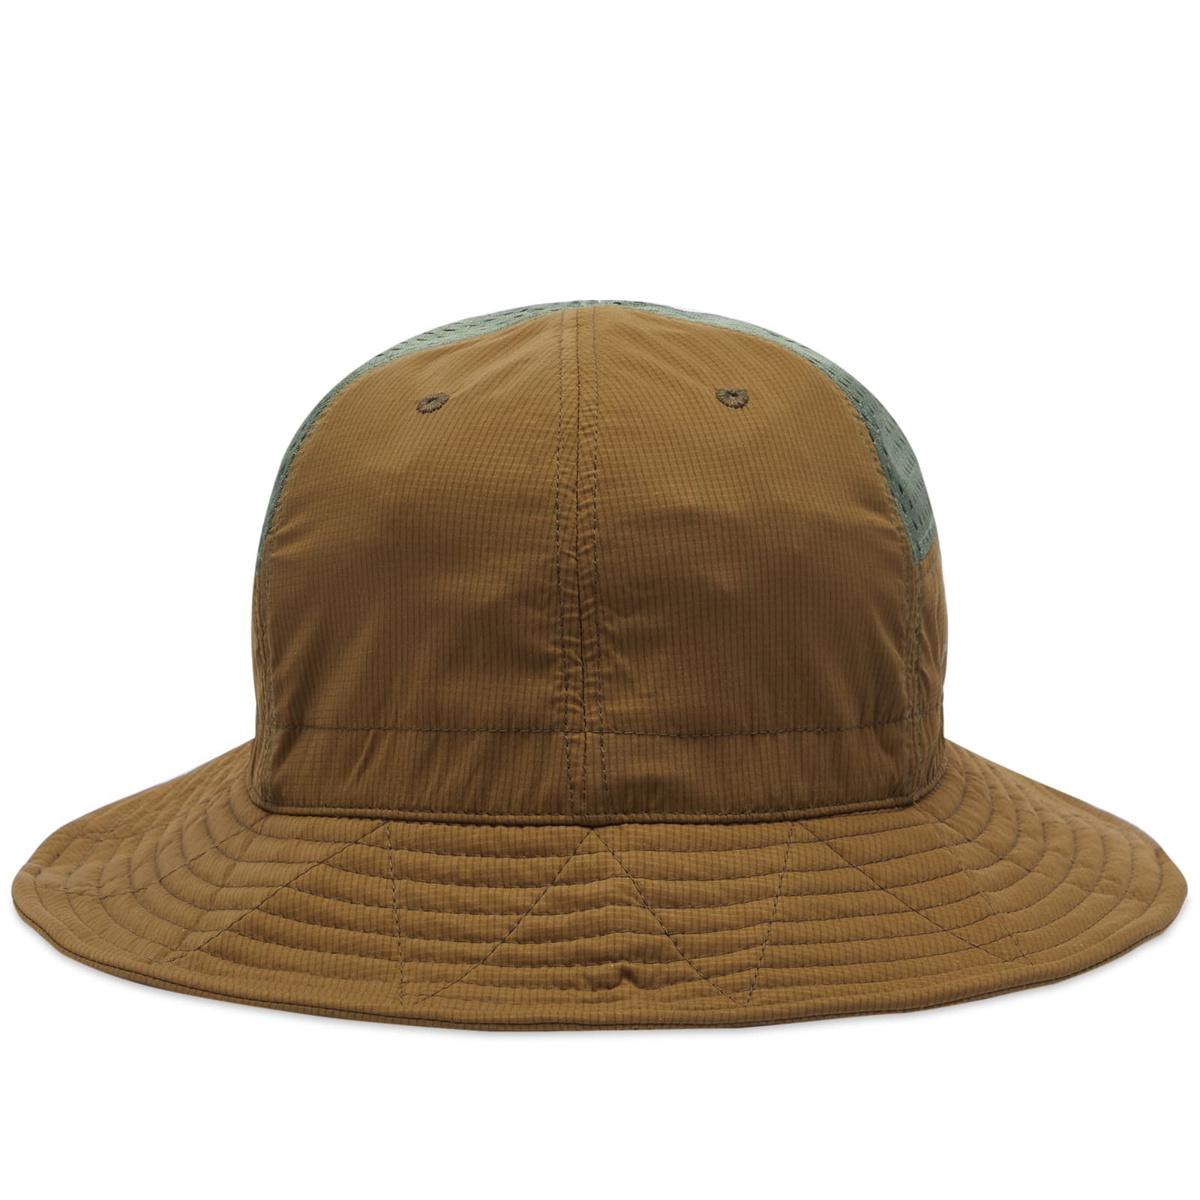 CAYL Men's Stretch Nylon Mesh Hat in Brown Khaki CAYL